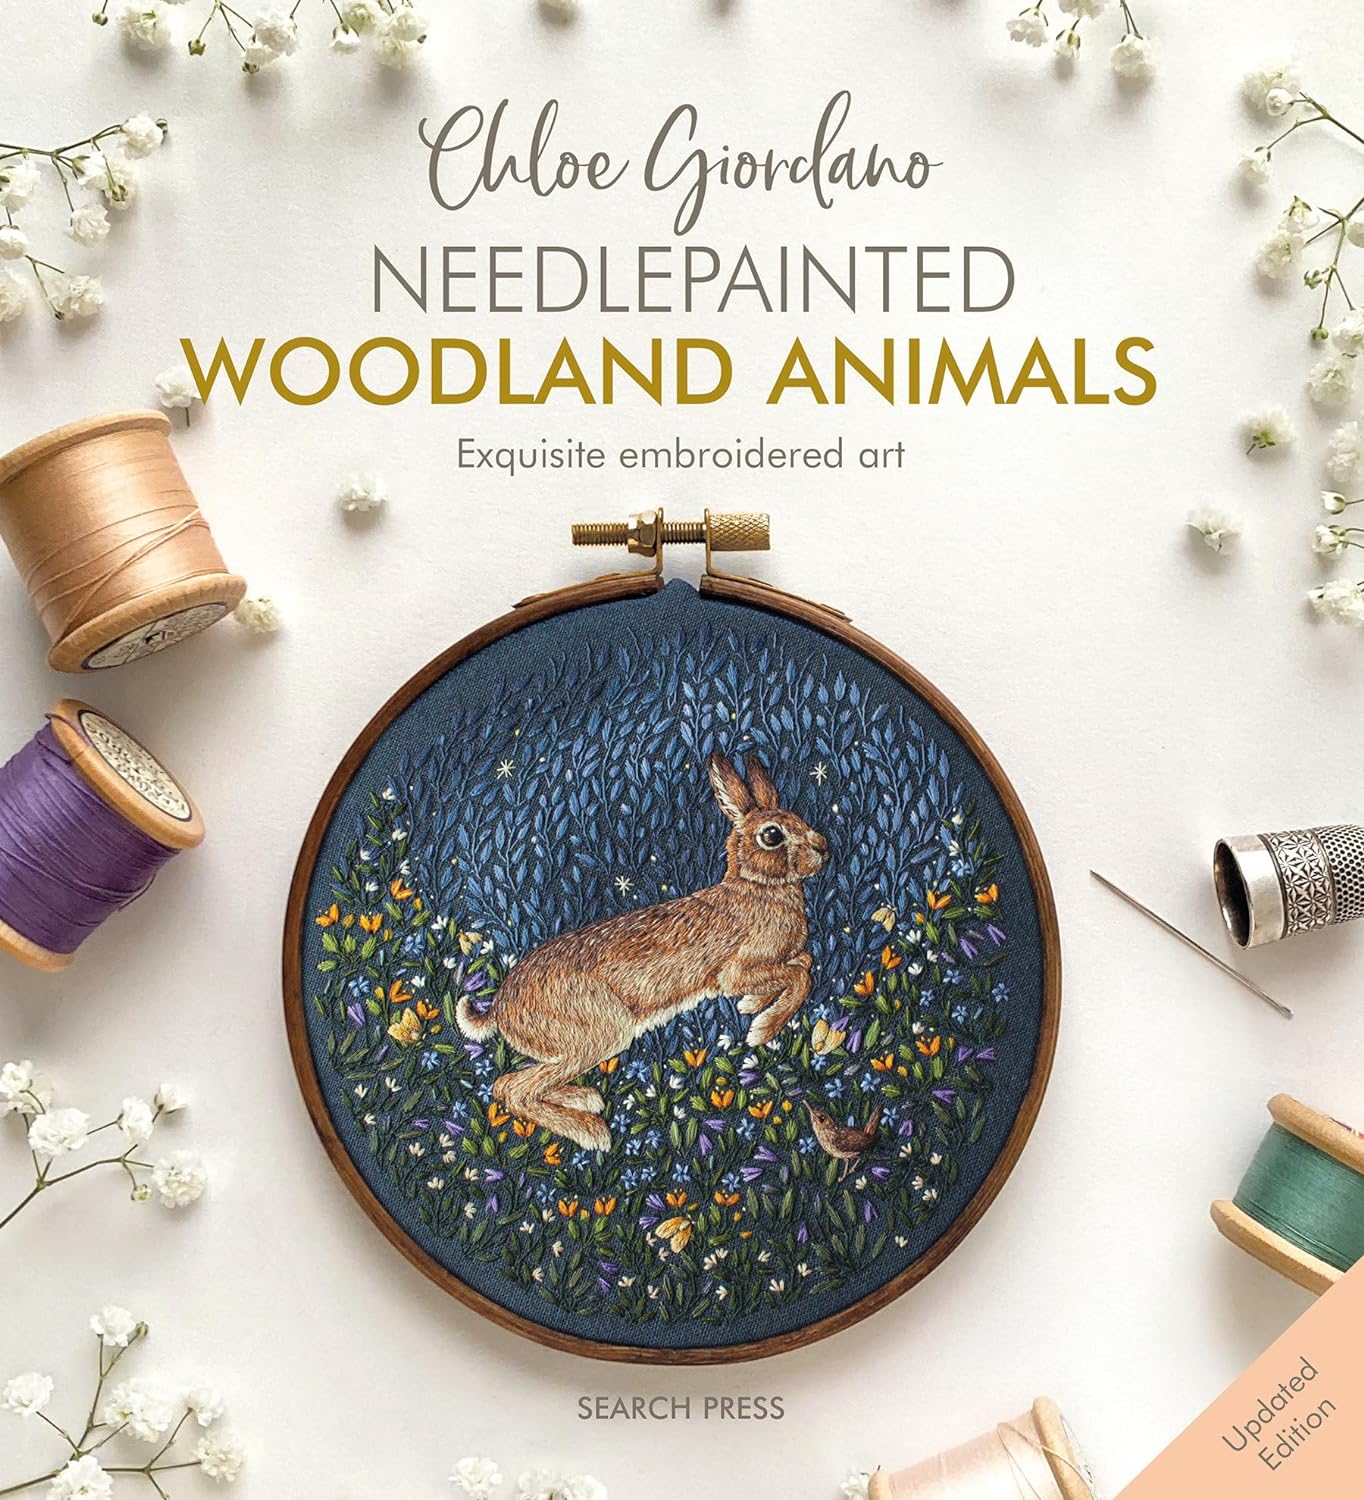 Needlepainted Woodland Animals - Chloe Giordano - The Little Yarn Store